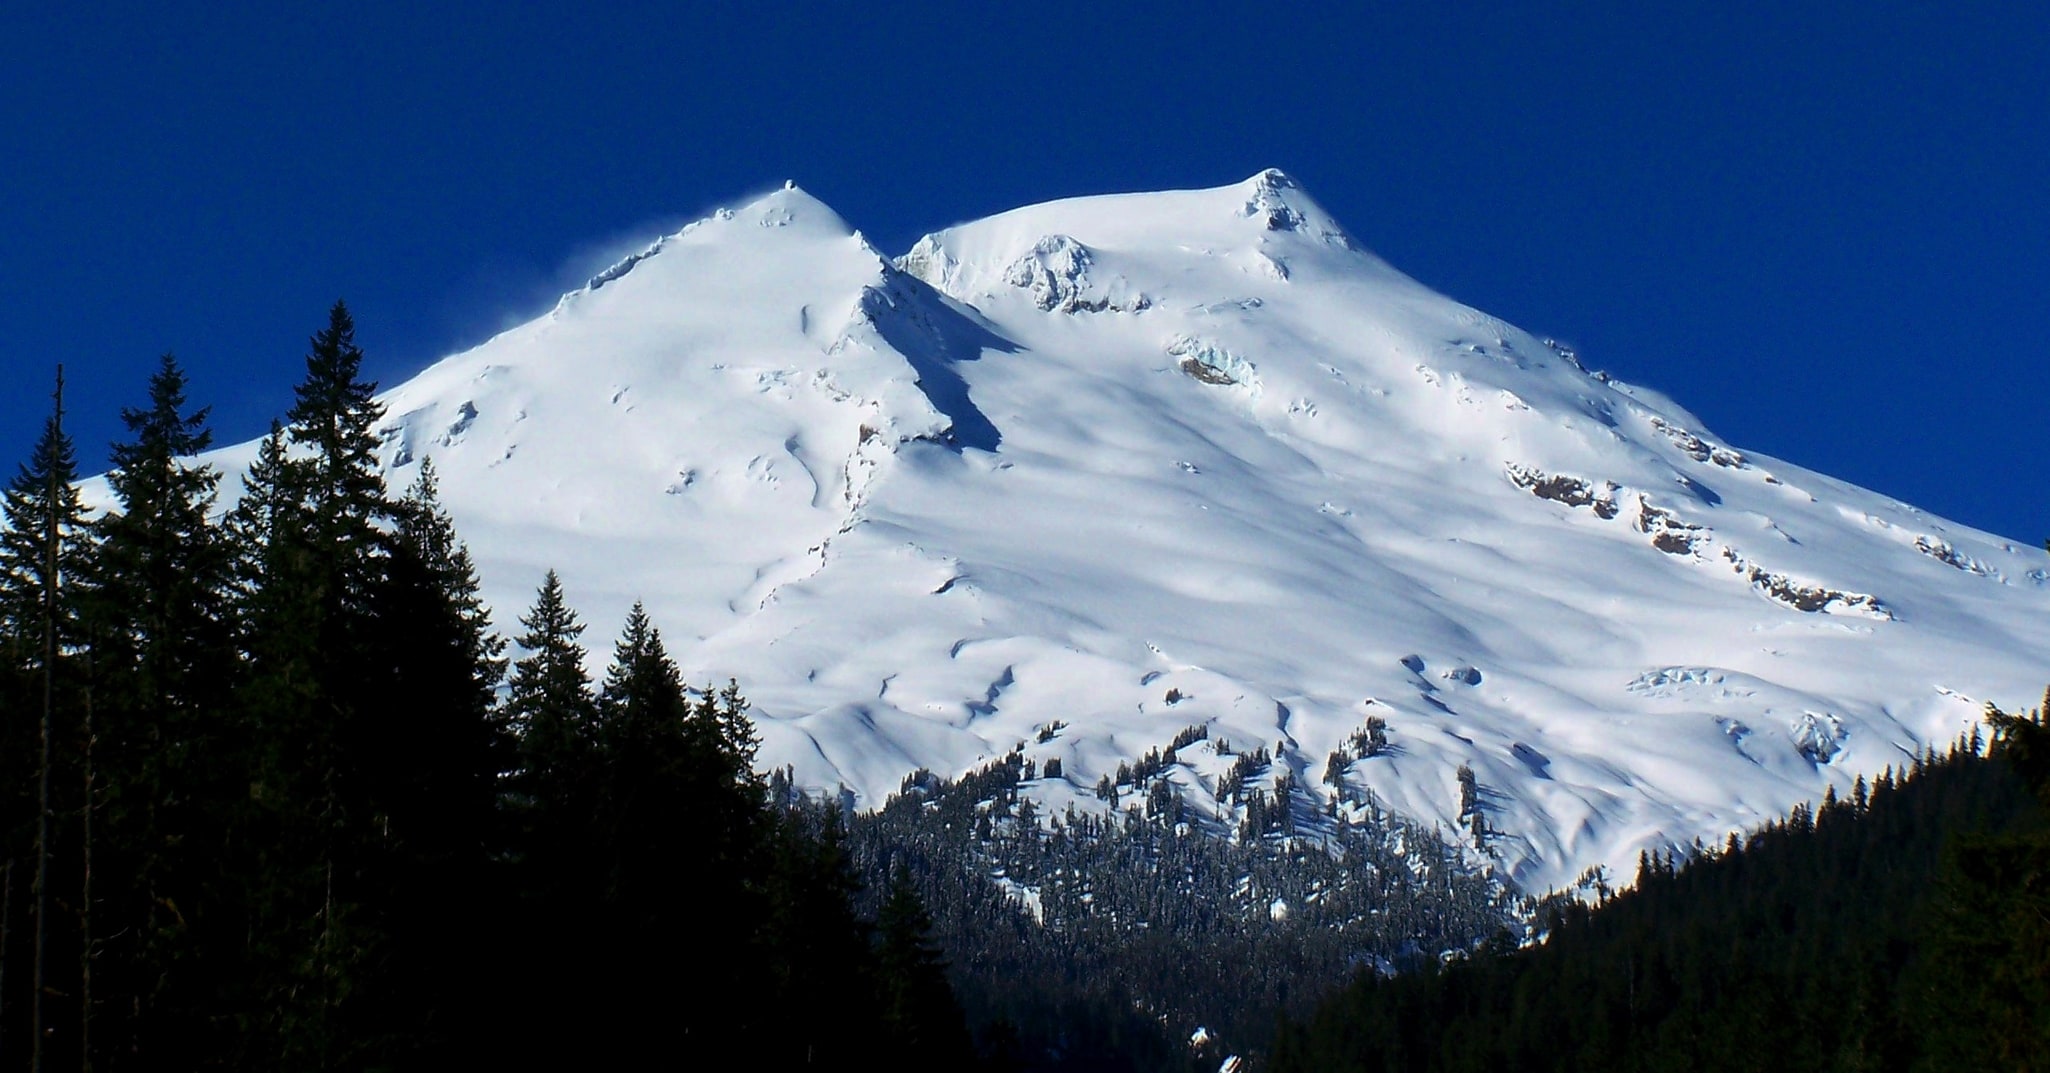 Mount Baker, United States